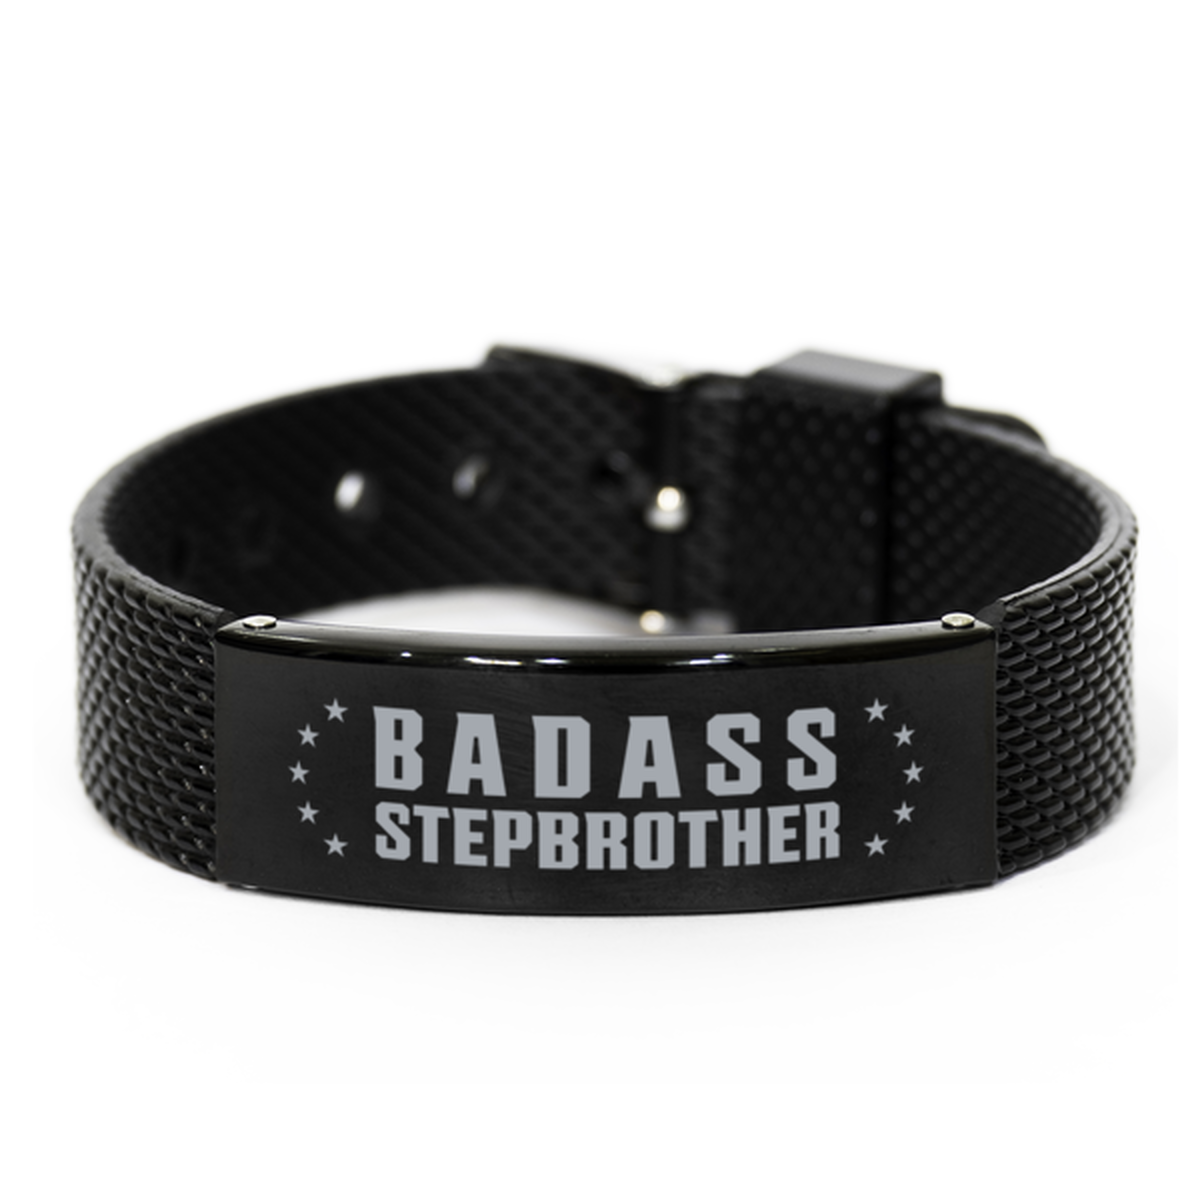 Stepbrother Black Shark Mesh Bracelet, Badass Stepbrother, Funny Family Gifts For Stepbrother From Brother Sister